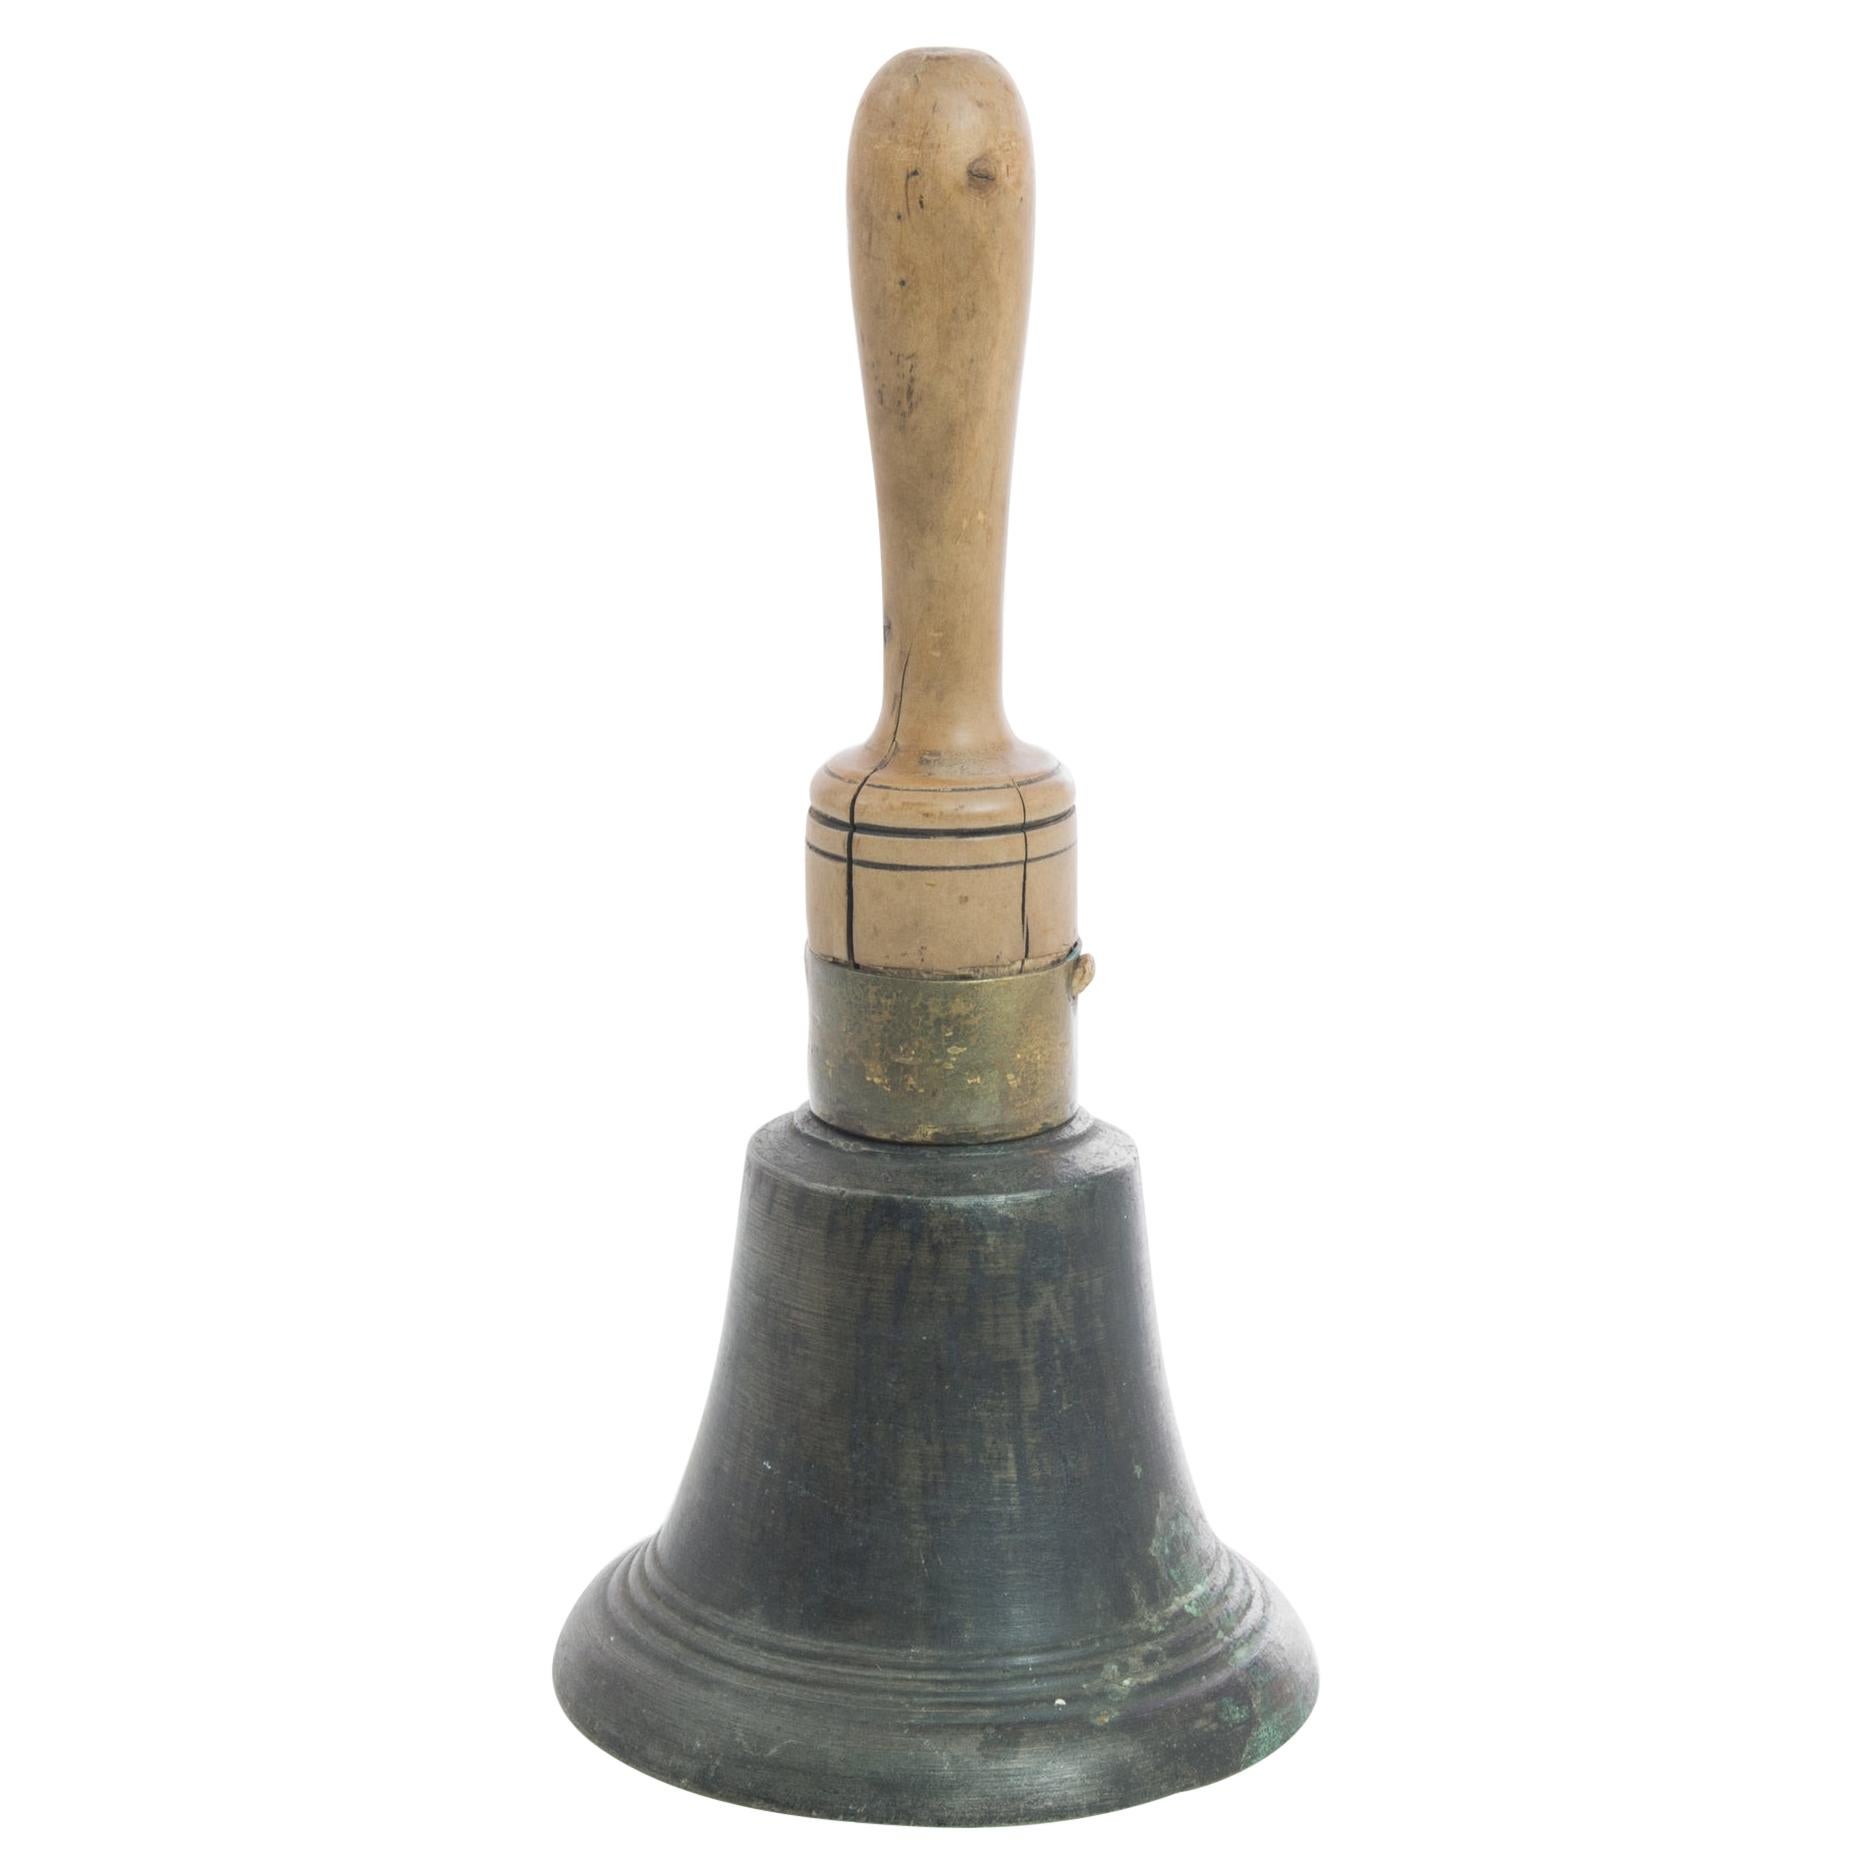 Antique Belgian Wooden Handled Dinner Bell